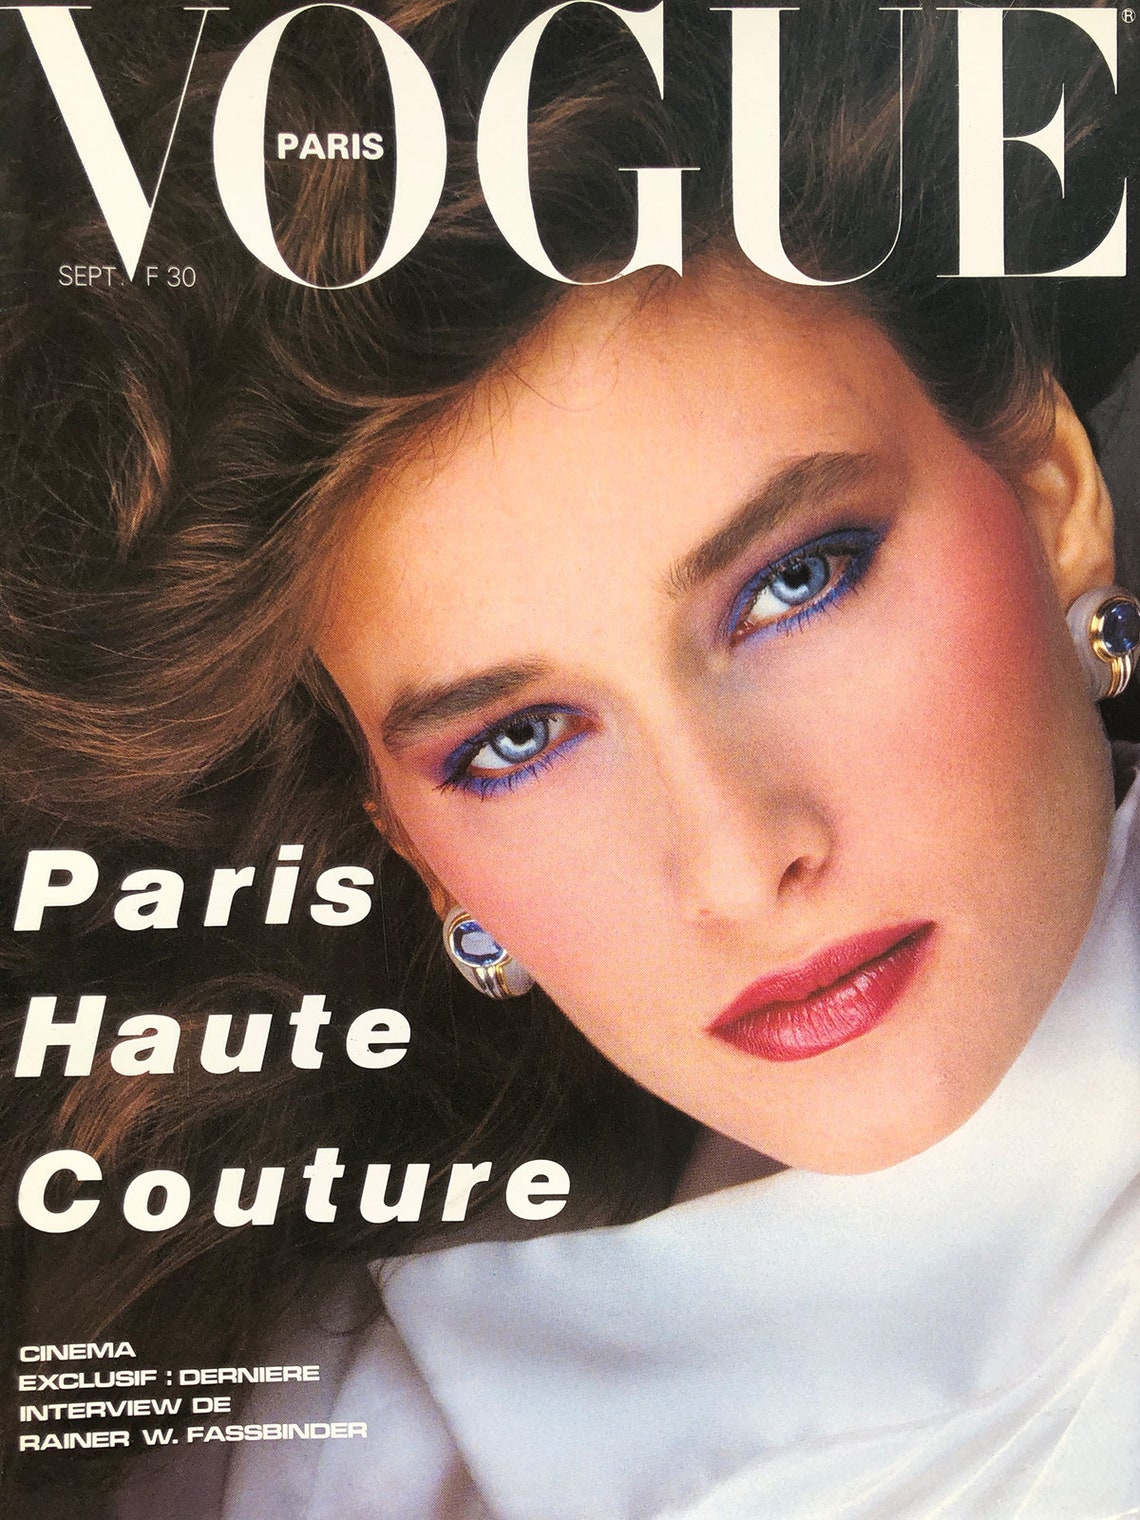 VOGUE Paris September 1982 French Vintage Fashion Magazine | Etsy